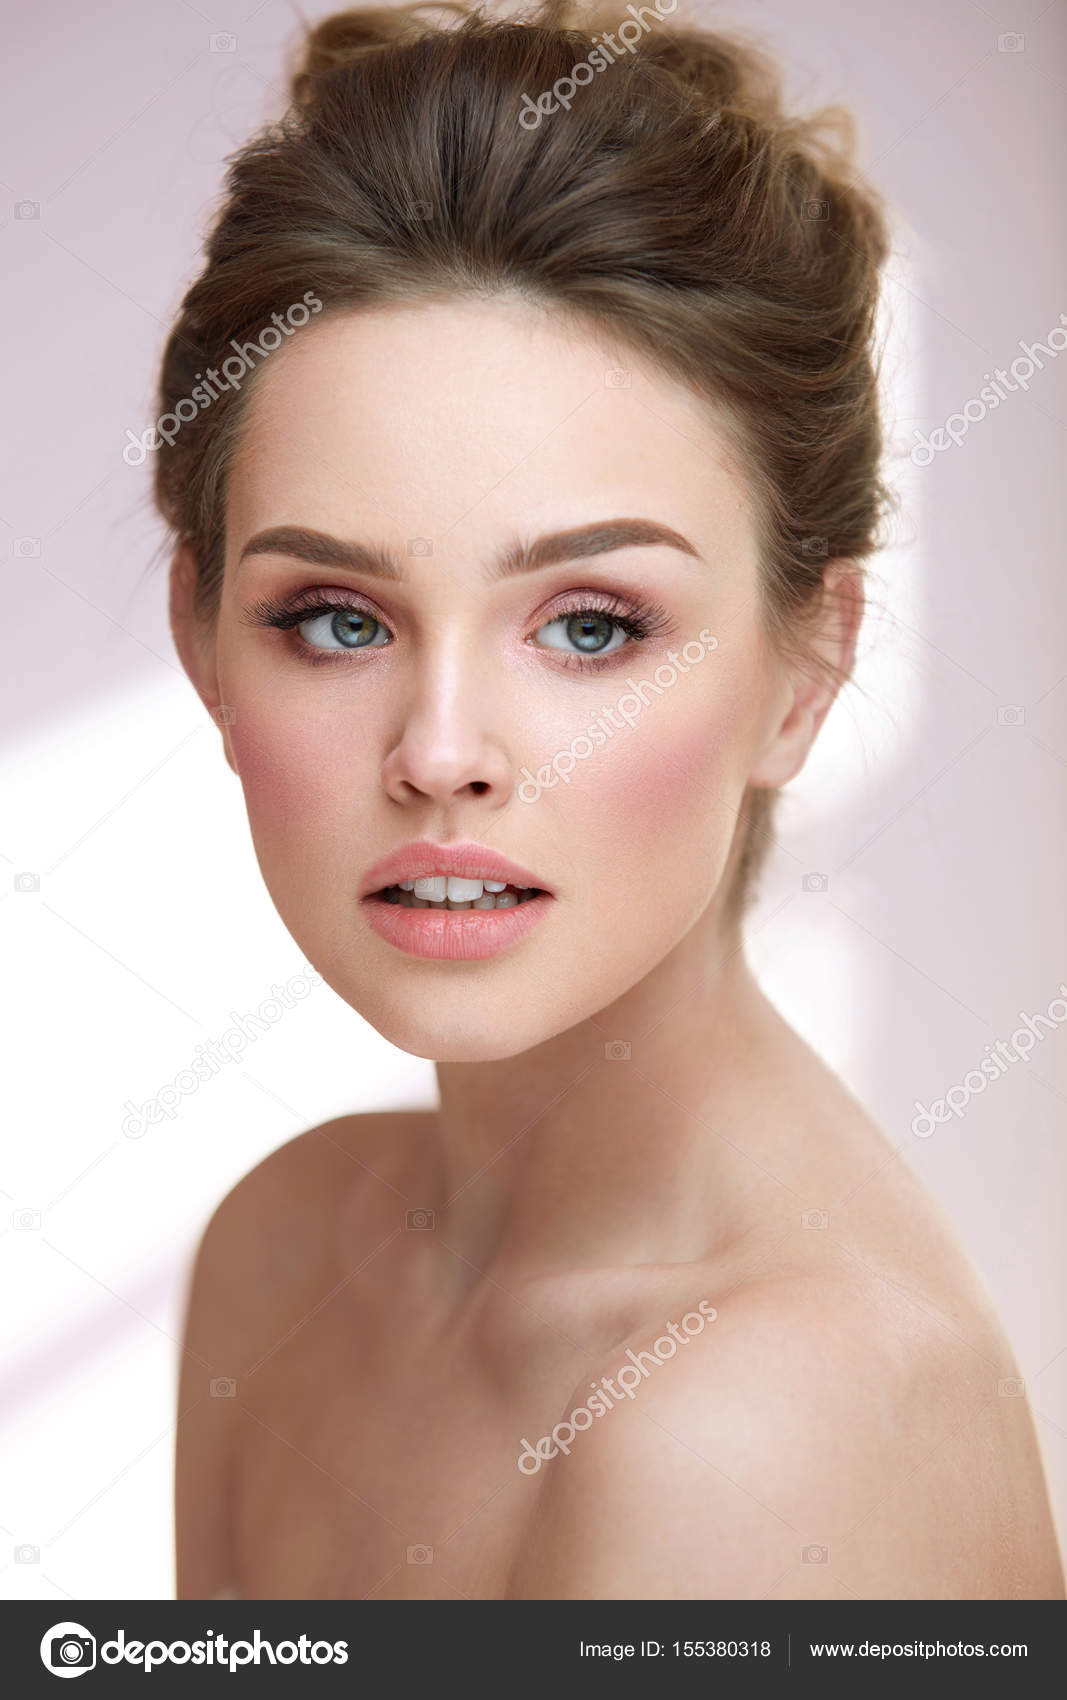 depositphotos_155380318-stock-photo-beauty-woman-face-beautiful-sexy.jpg